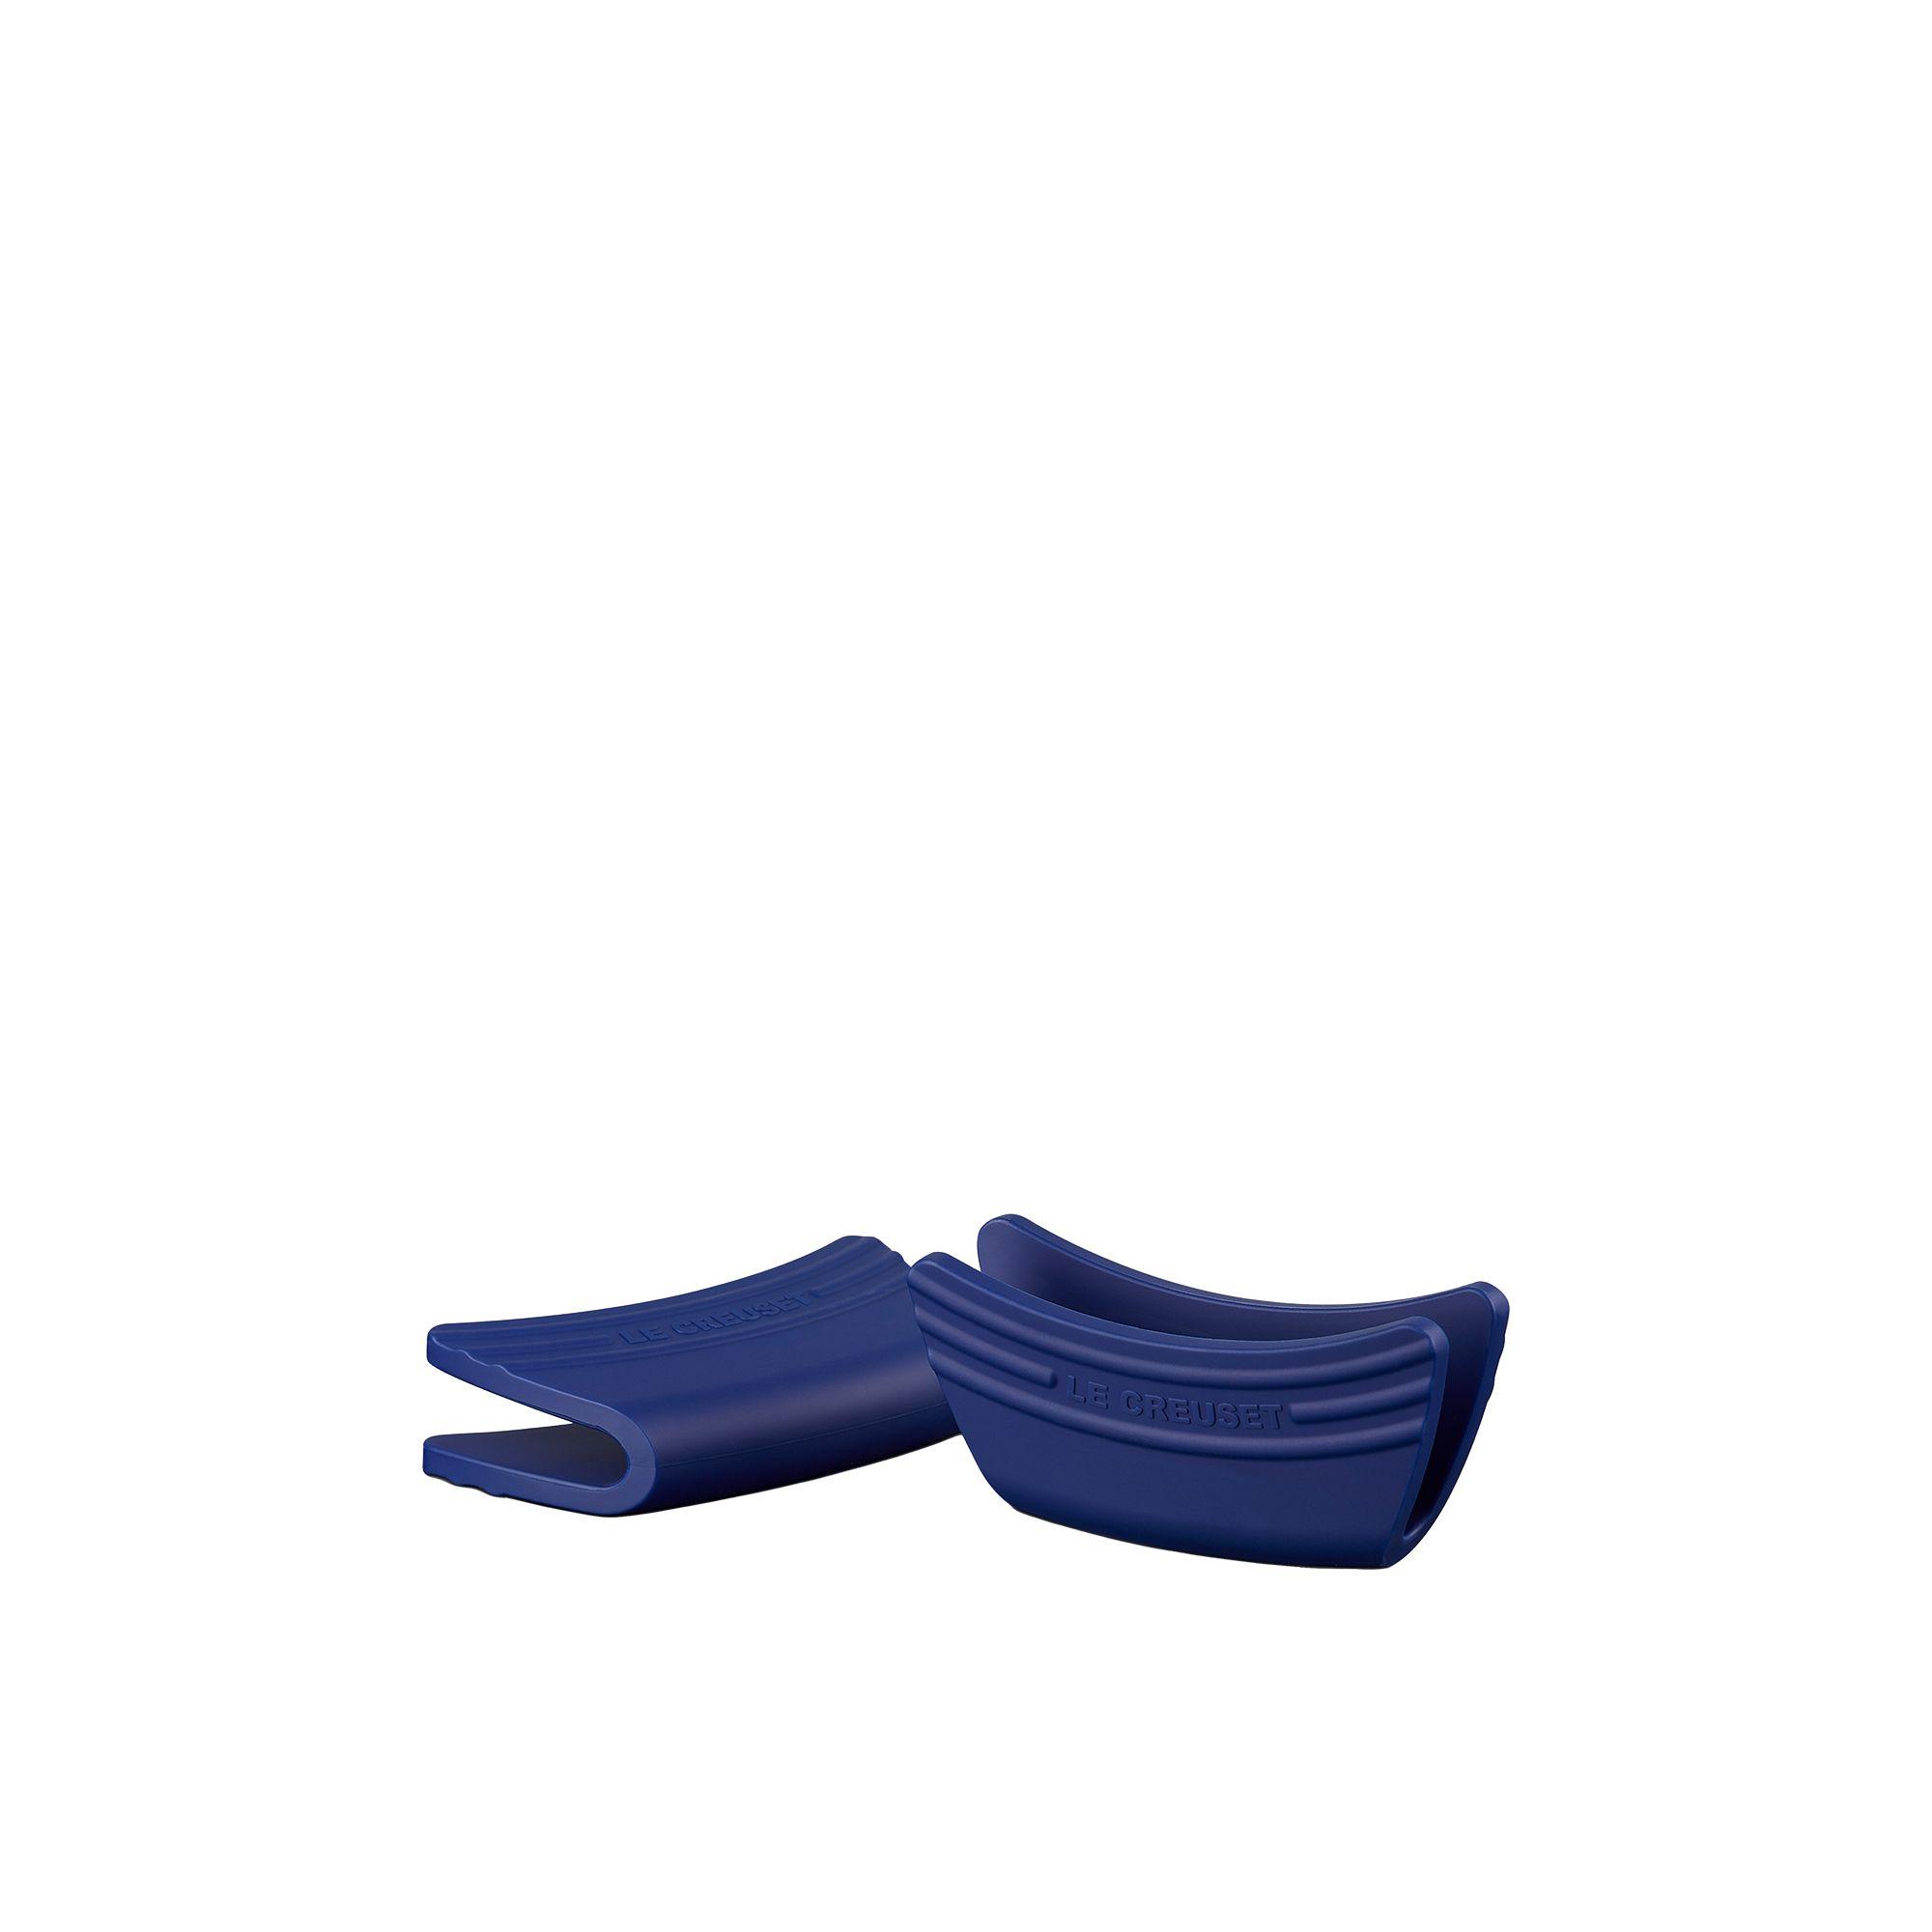 Le Creuset Silicone Handle Grip Set of 2 Azure Blue Image 3